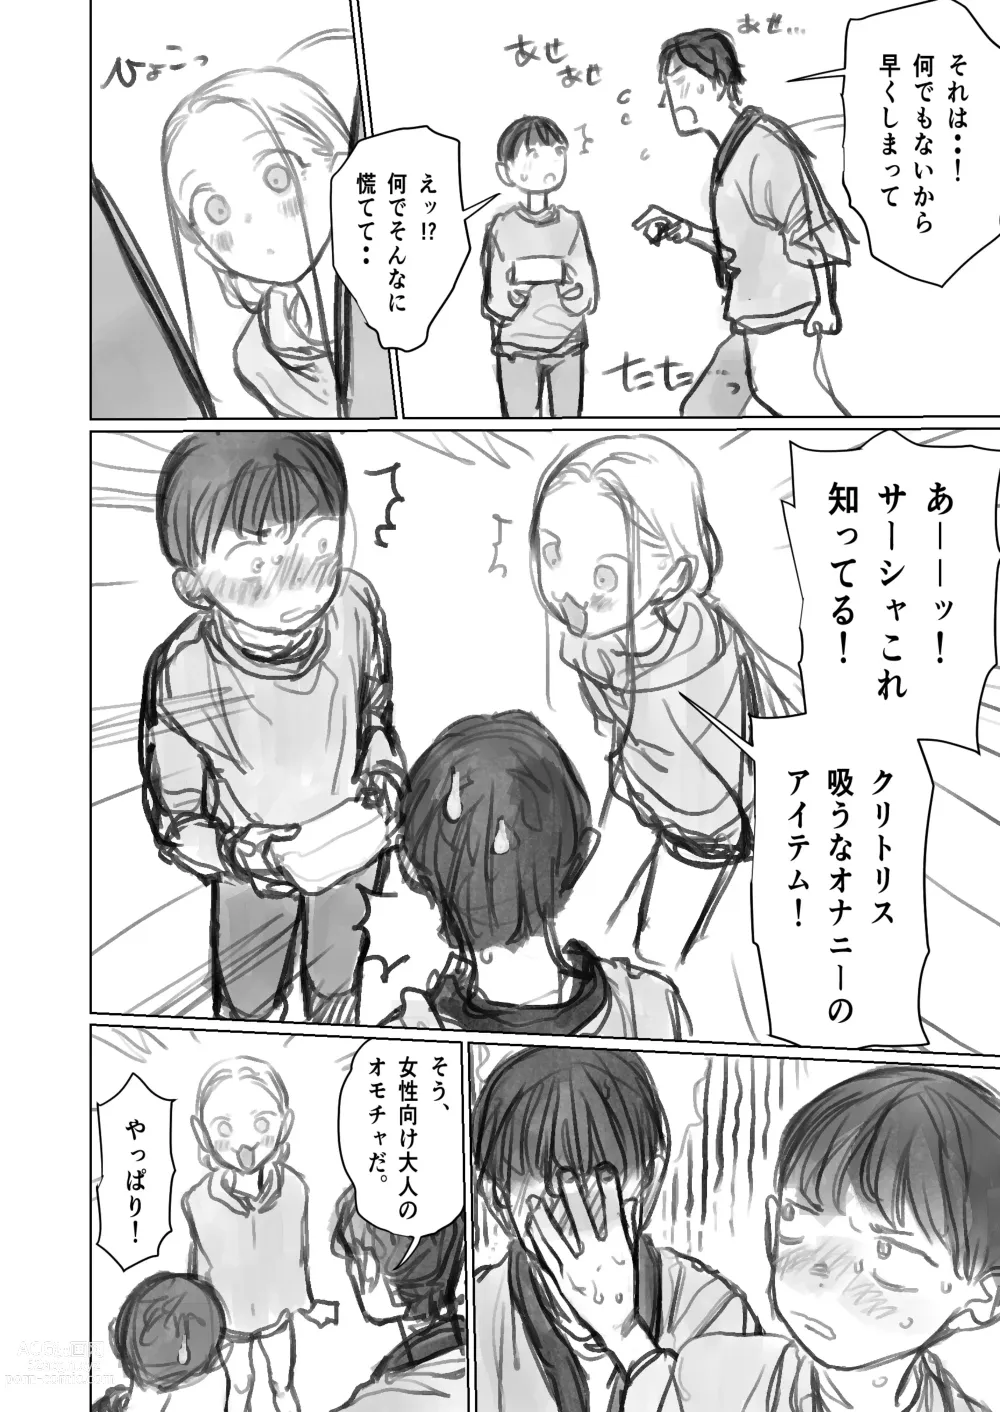 Page 2 of doujinshi Cli Kyuuin Omocha to Sasha-chan.